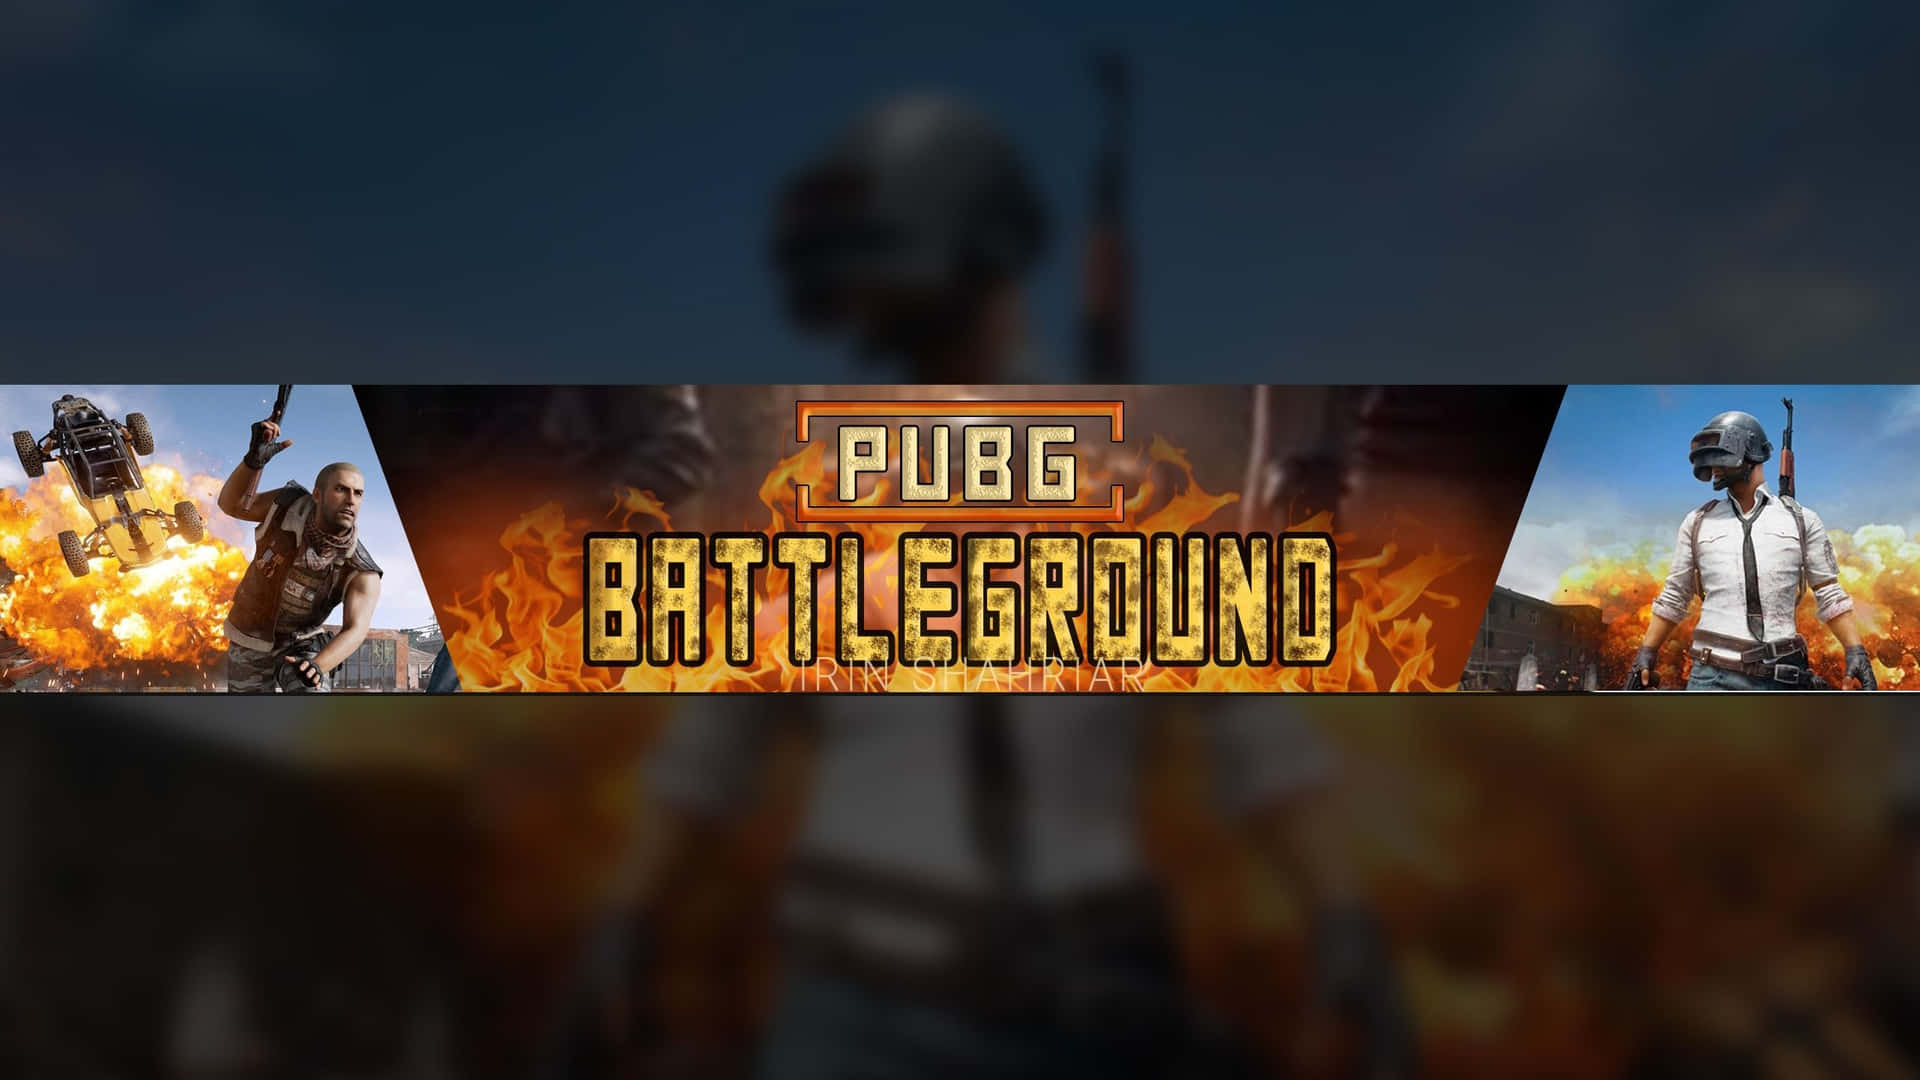 Intense PUBG Battle Scene on a Banner Background